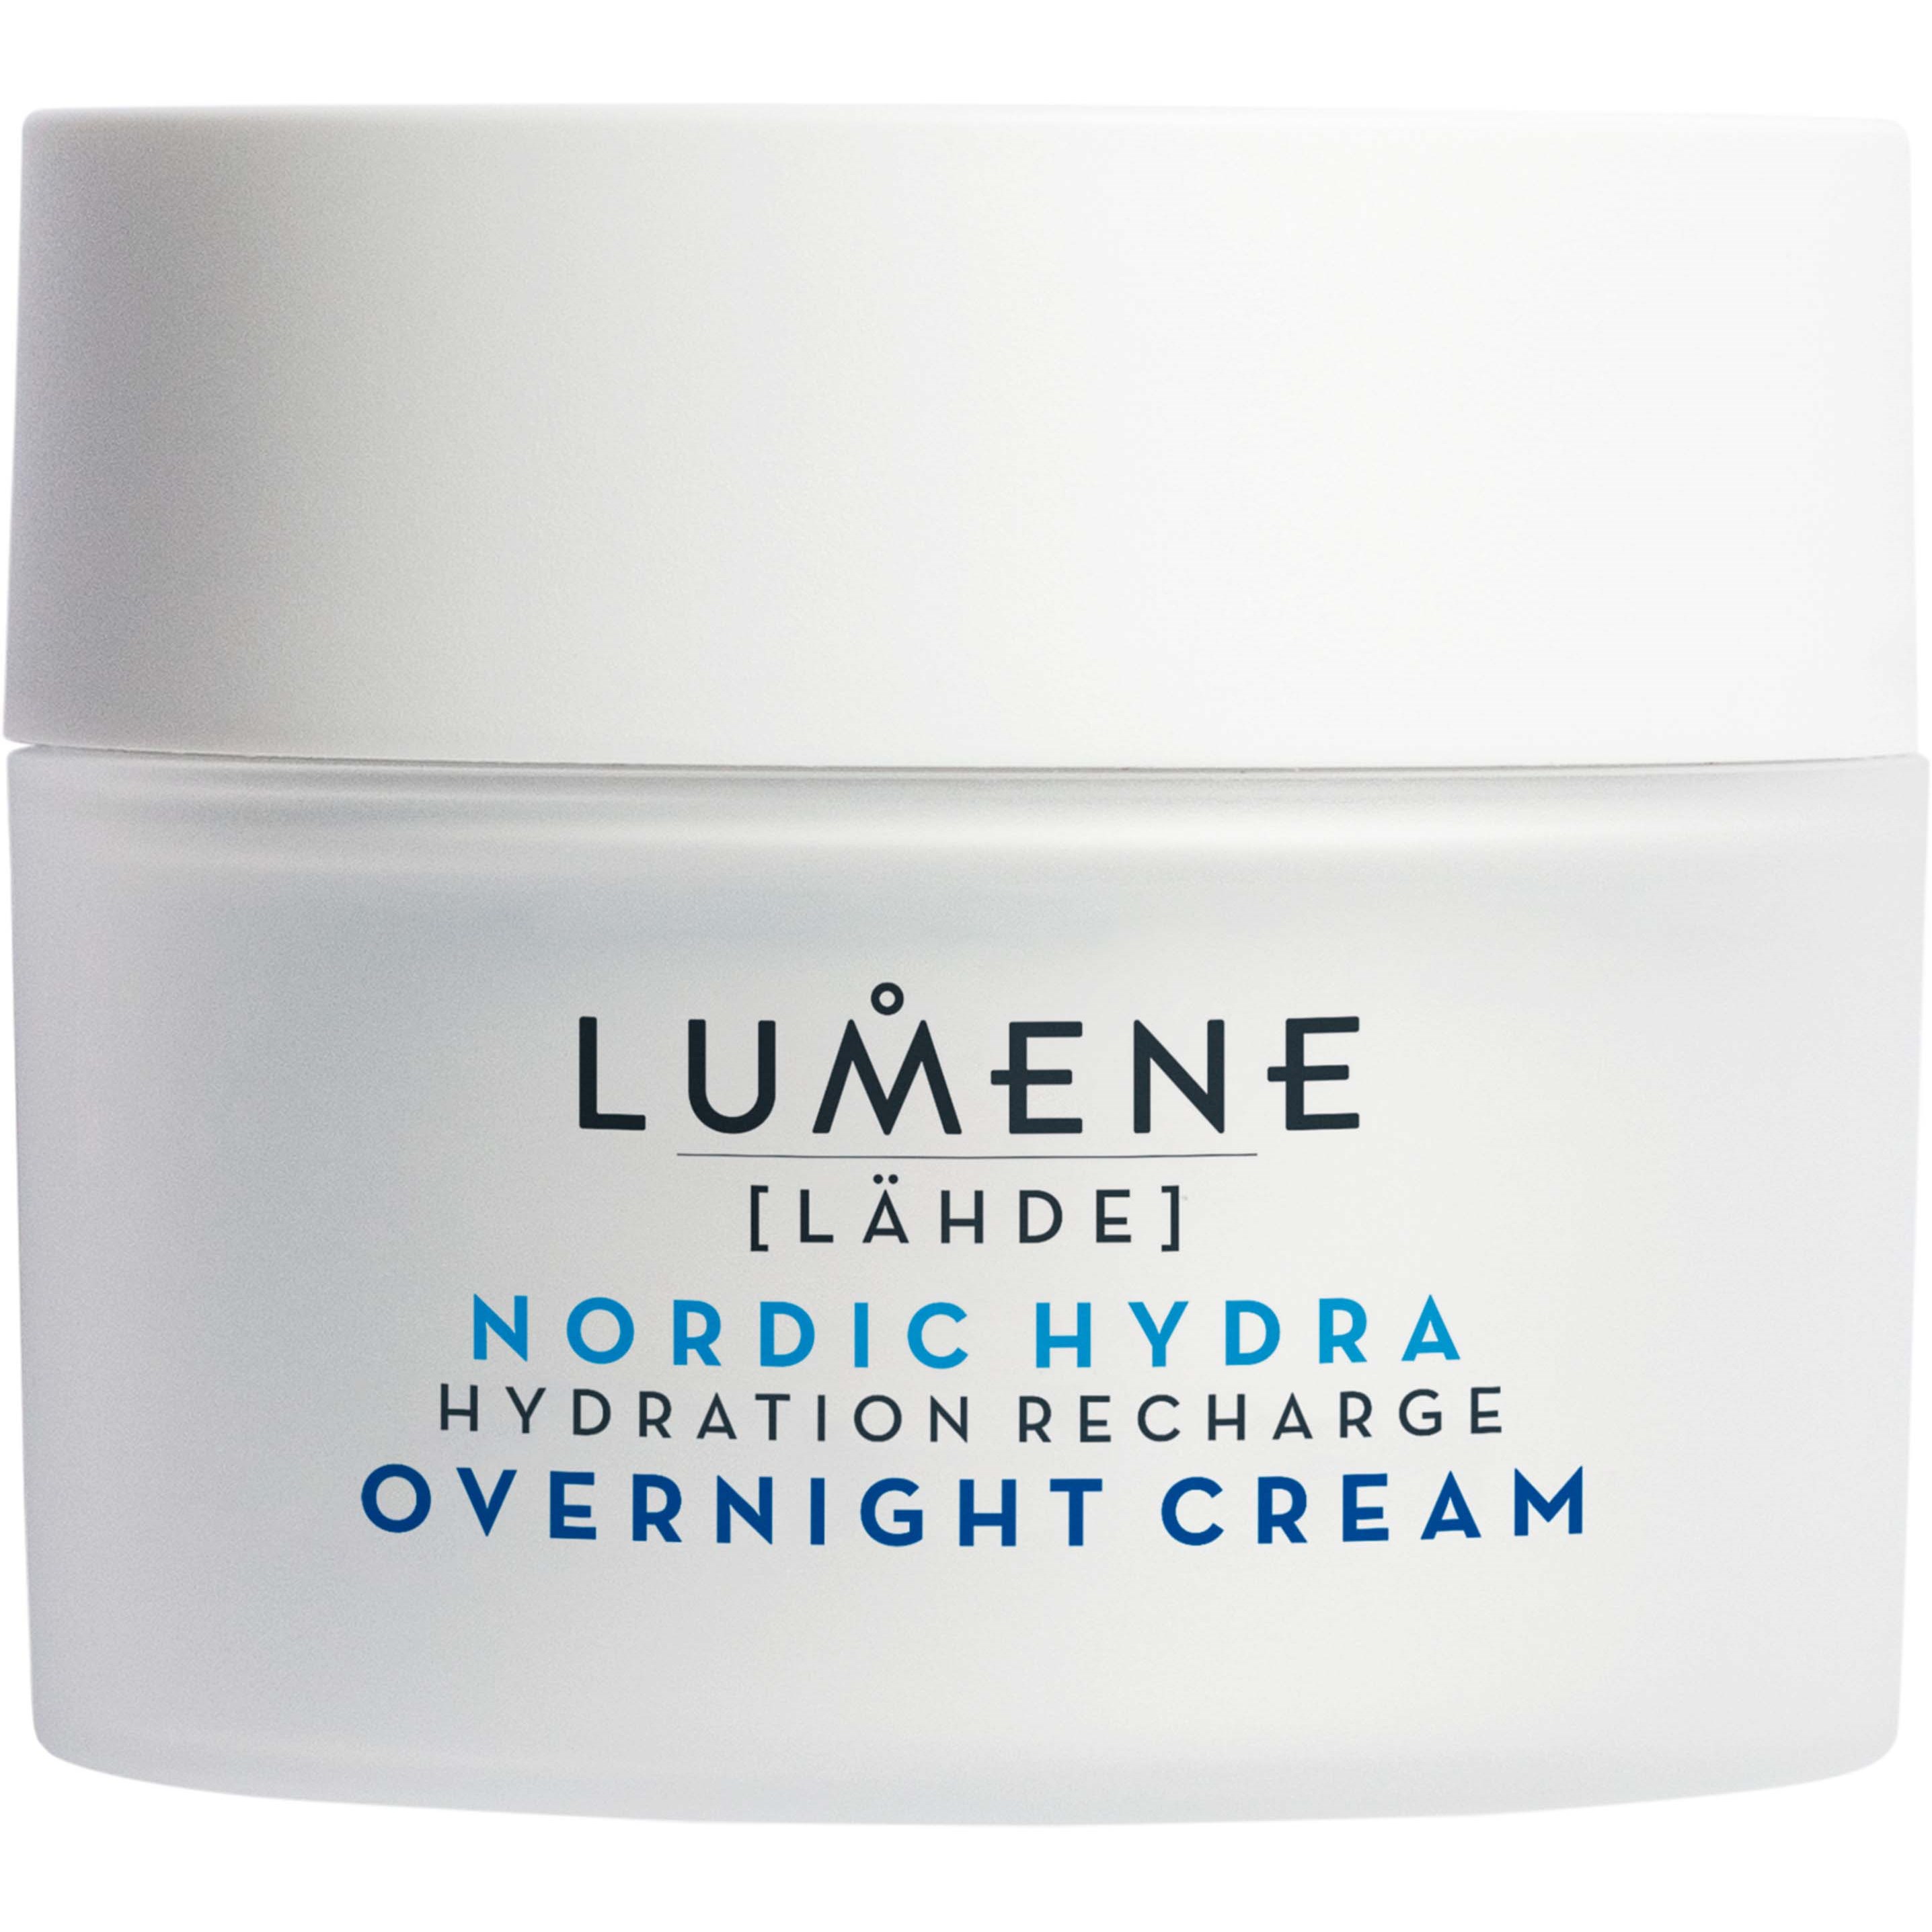 Bilde av Lumene Nordic Hydra Nordic Hydra Hydration Recharge Overnight Cream 50